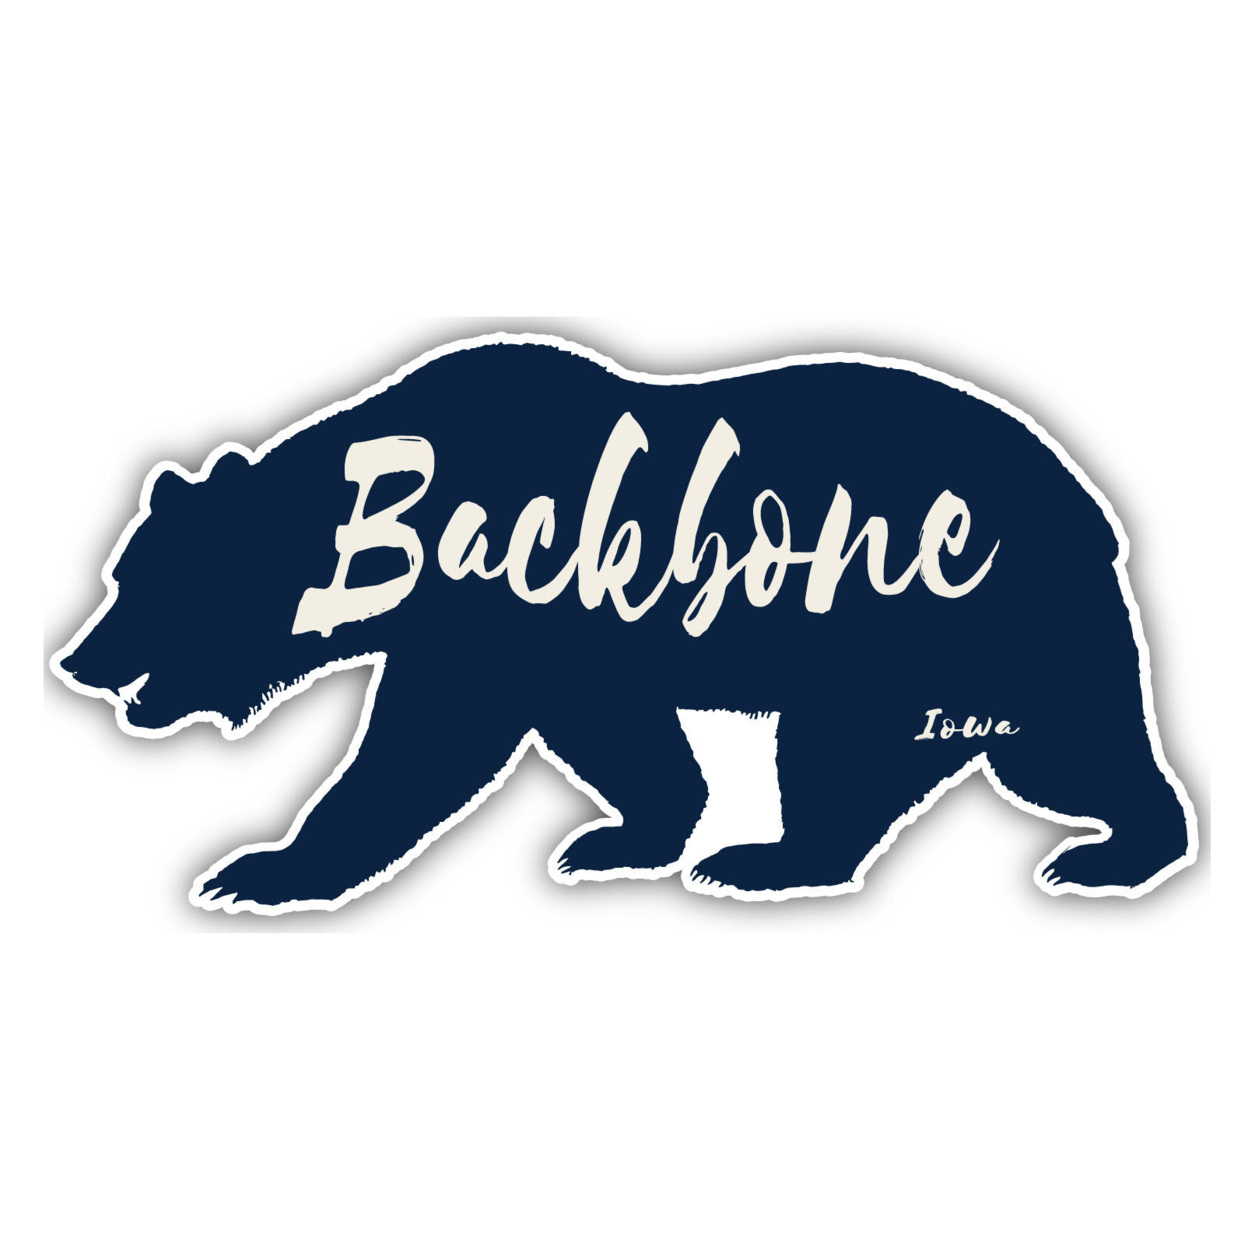 Backbone Iowa Souvenir Decorative Stickers (Choose Theme And Size) - Single Unit, 4-Inch, Bear